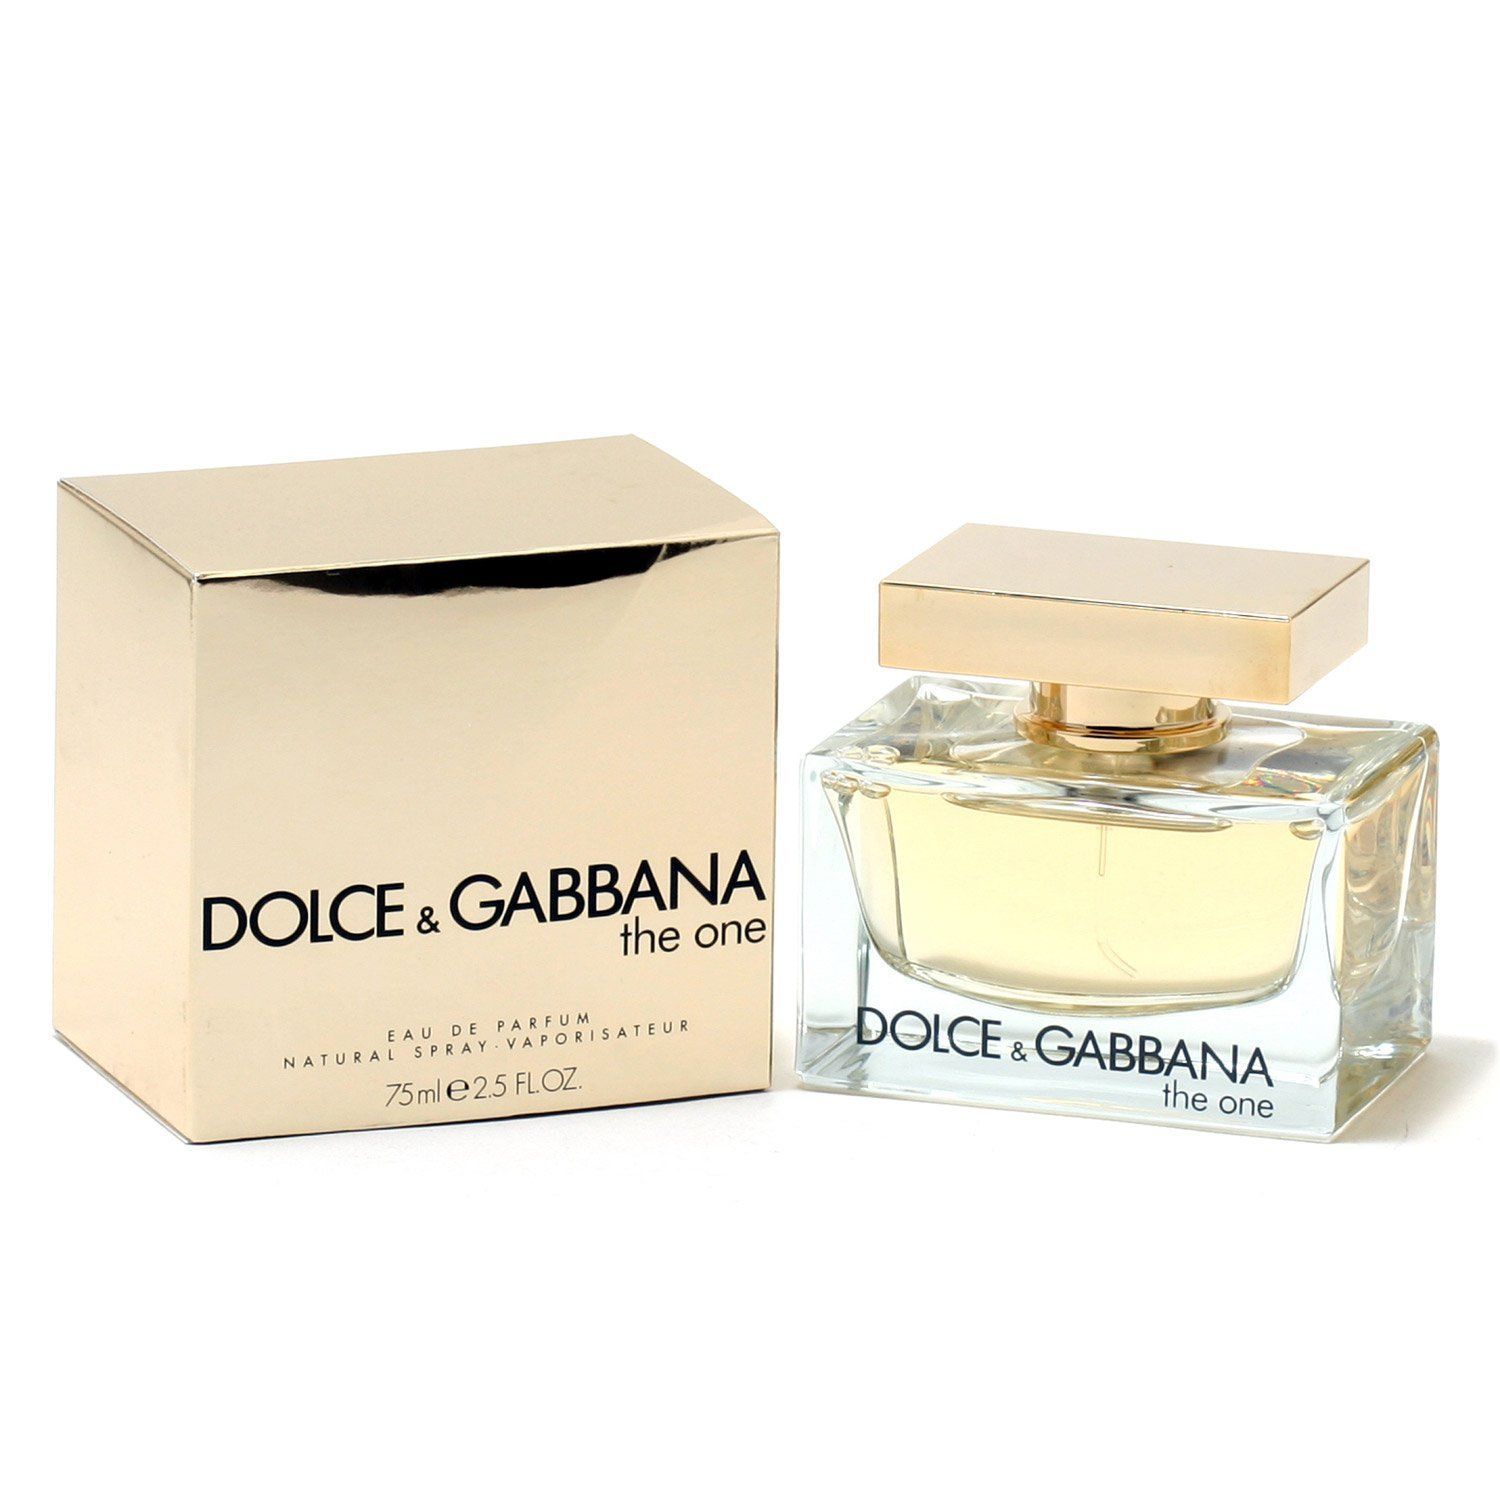 Dolce Gabbana the one женские 75 мл. D.G. the one woman 75 ml. Dolce Gabbana the one 75ml women. Dolce Gabbana the one Eau de Parfum 1,5 ml 0.0.5floz.. Духи дольче габбана зе ван